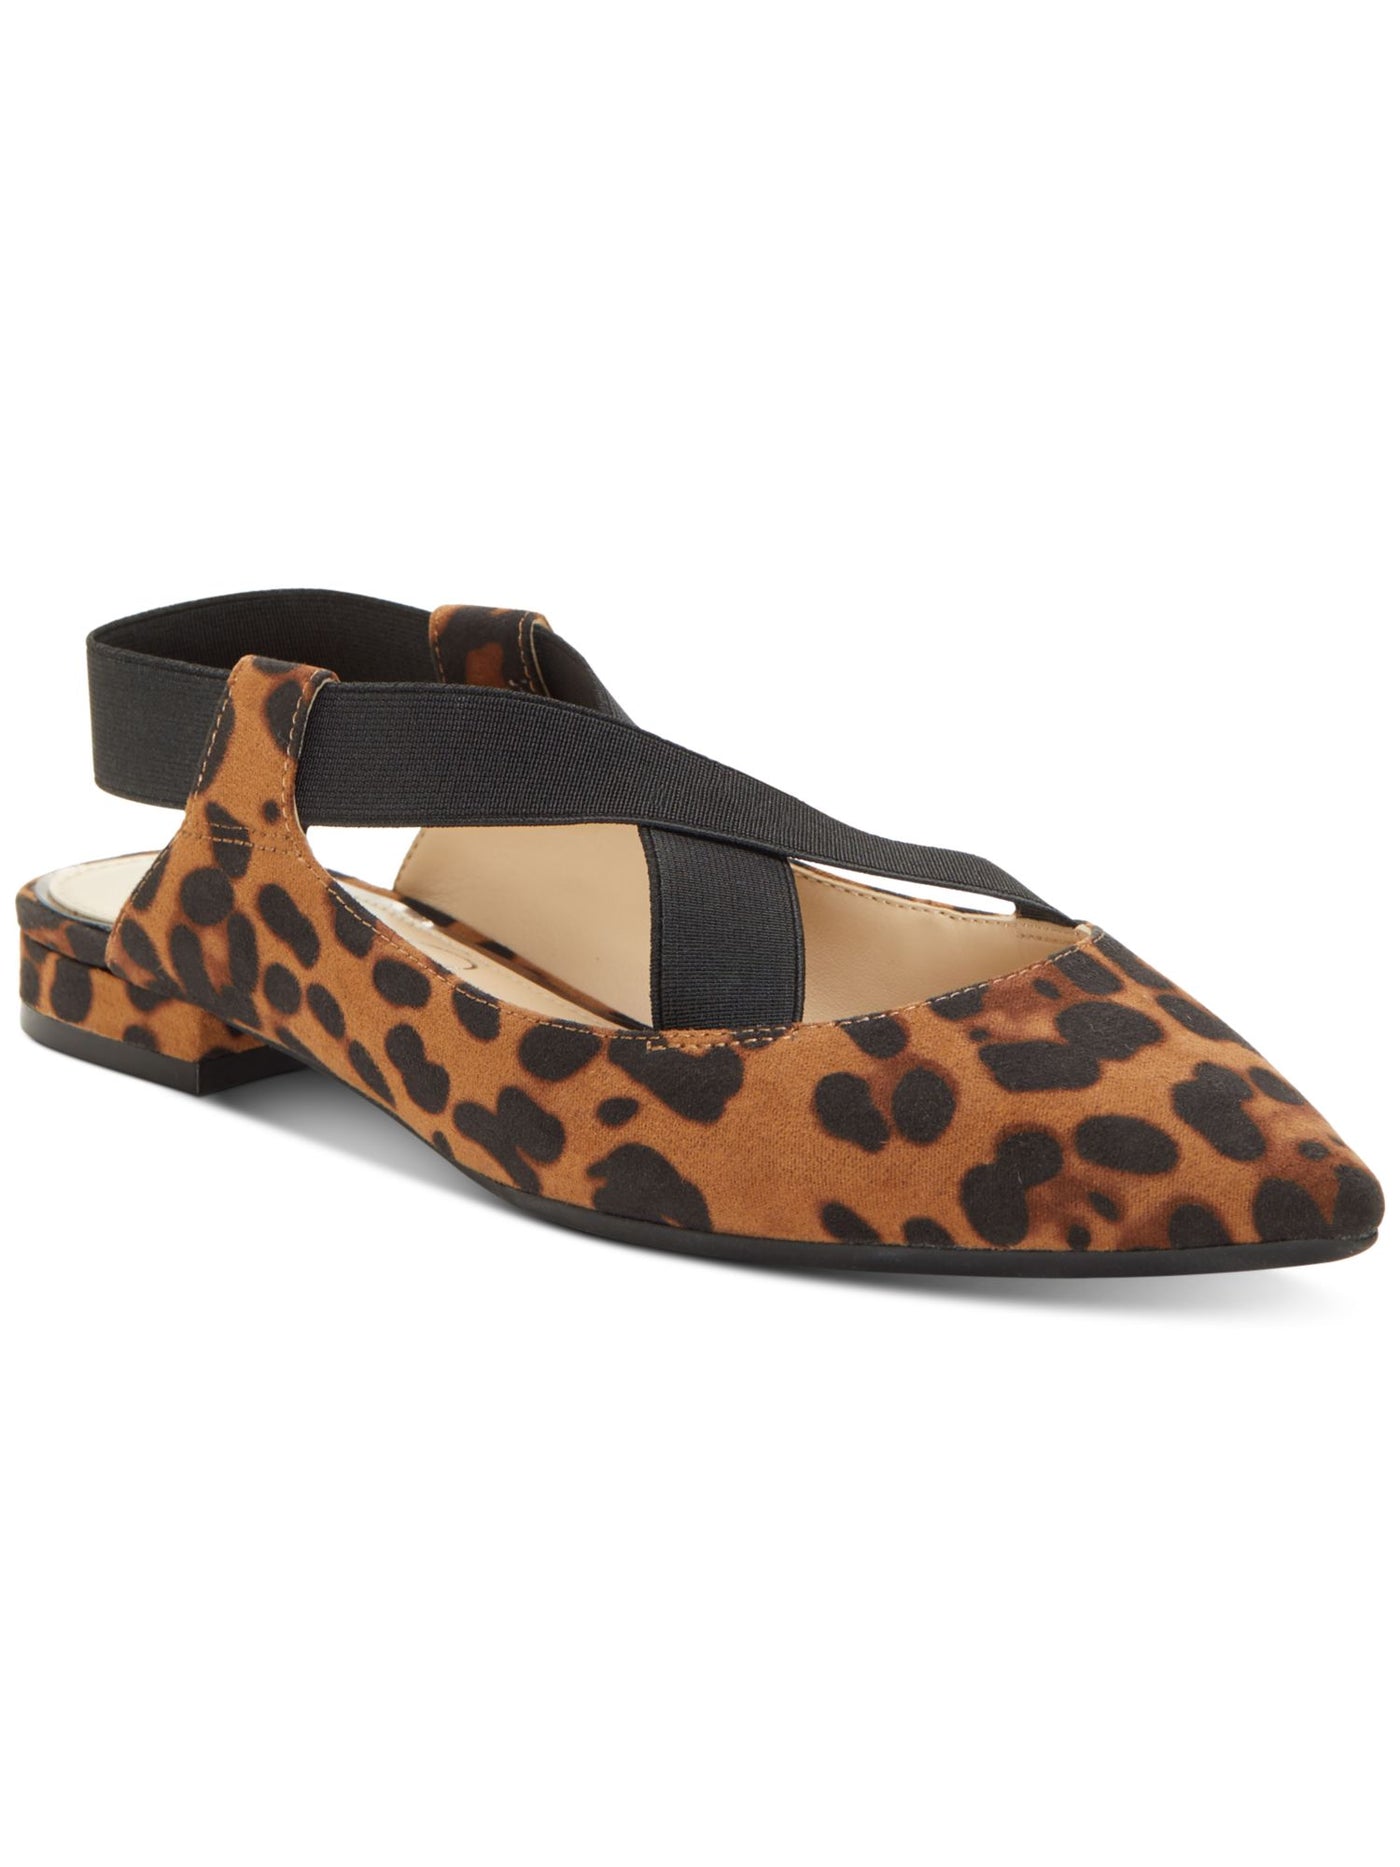 JESSICA SIMPSON Womens Beige Leopard Print Slingback Stretch Padded Lurina Pointed Toe Block Heel Slip On Flats Shoes 6.5 M